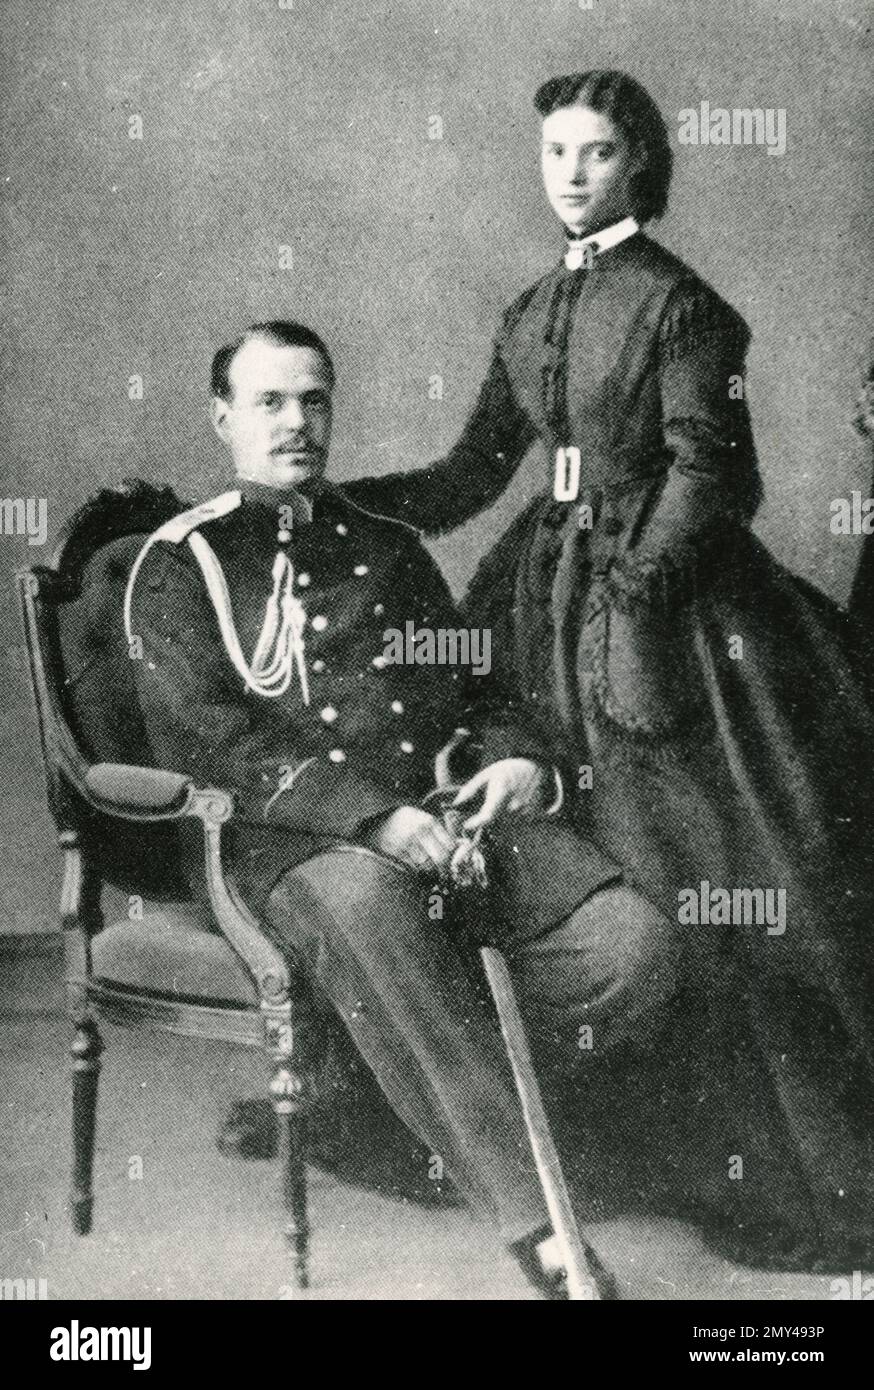 L'empereur russe Alexandre III et sa fille la Grande Duchesse Olga Alexandrovna, Russie 1890s Banque D'Images